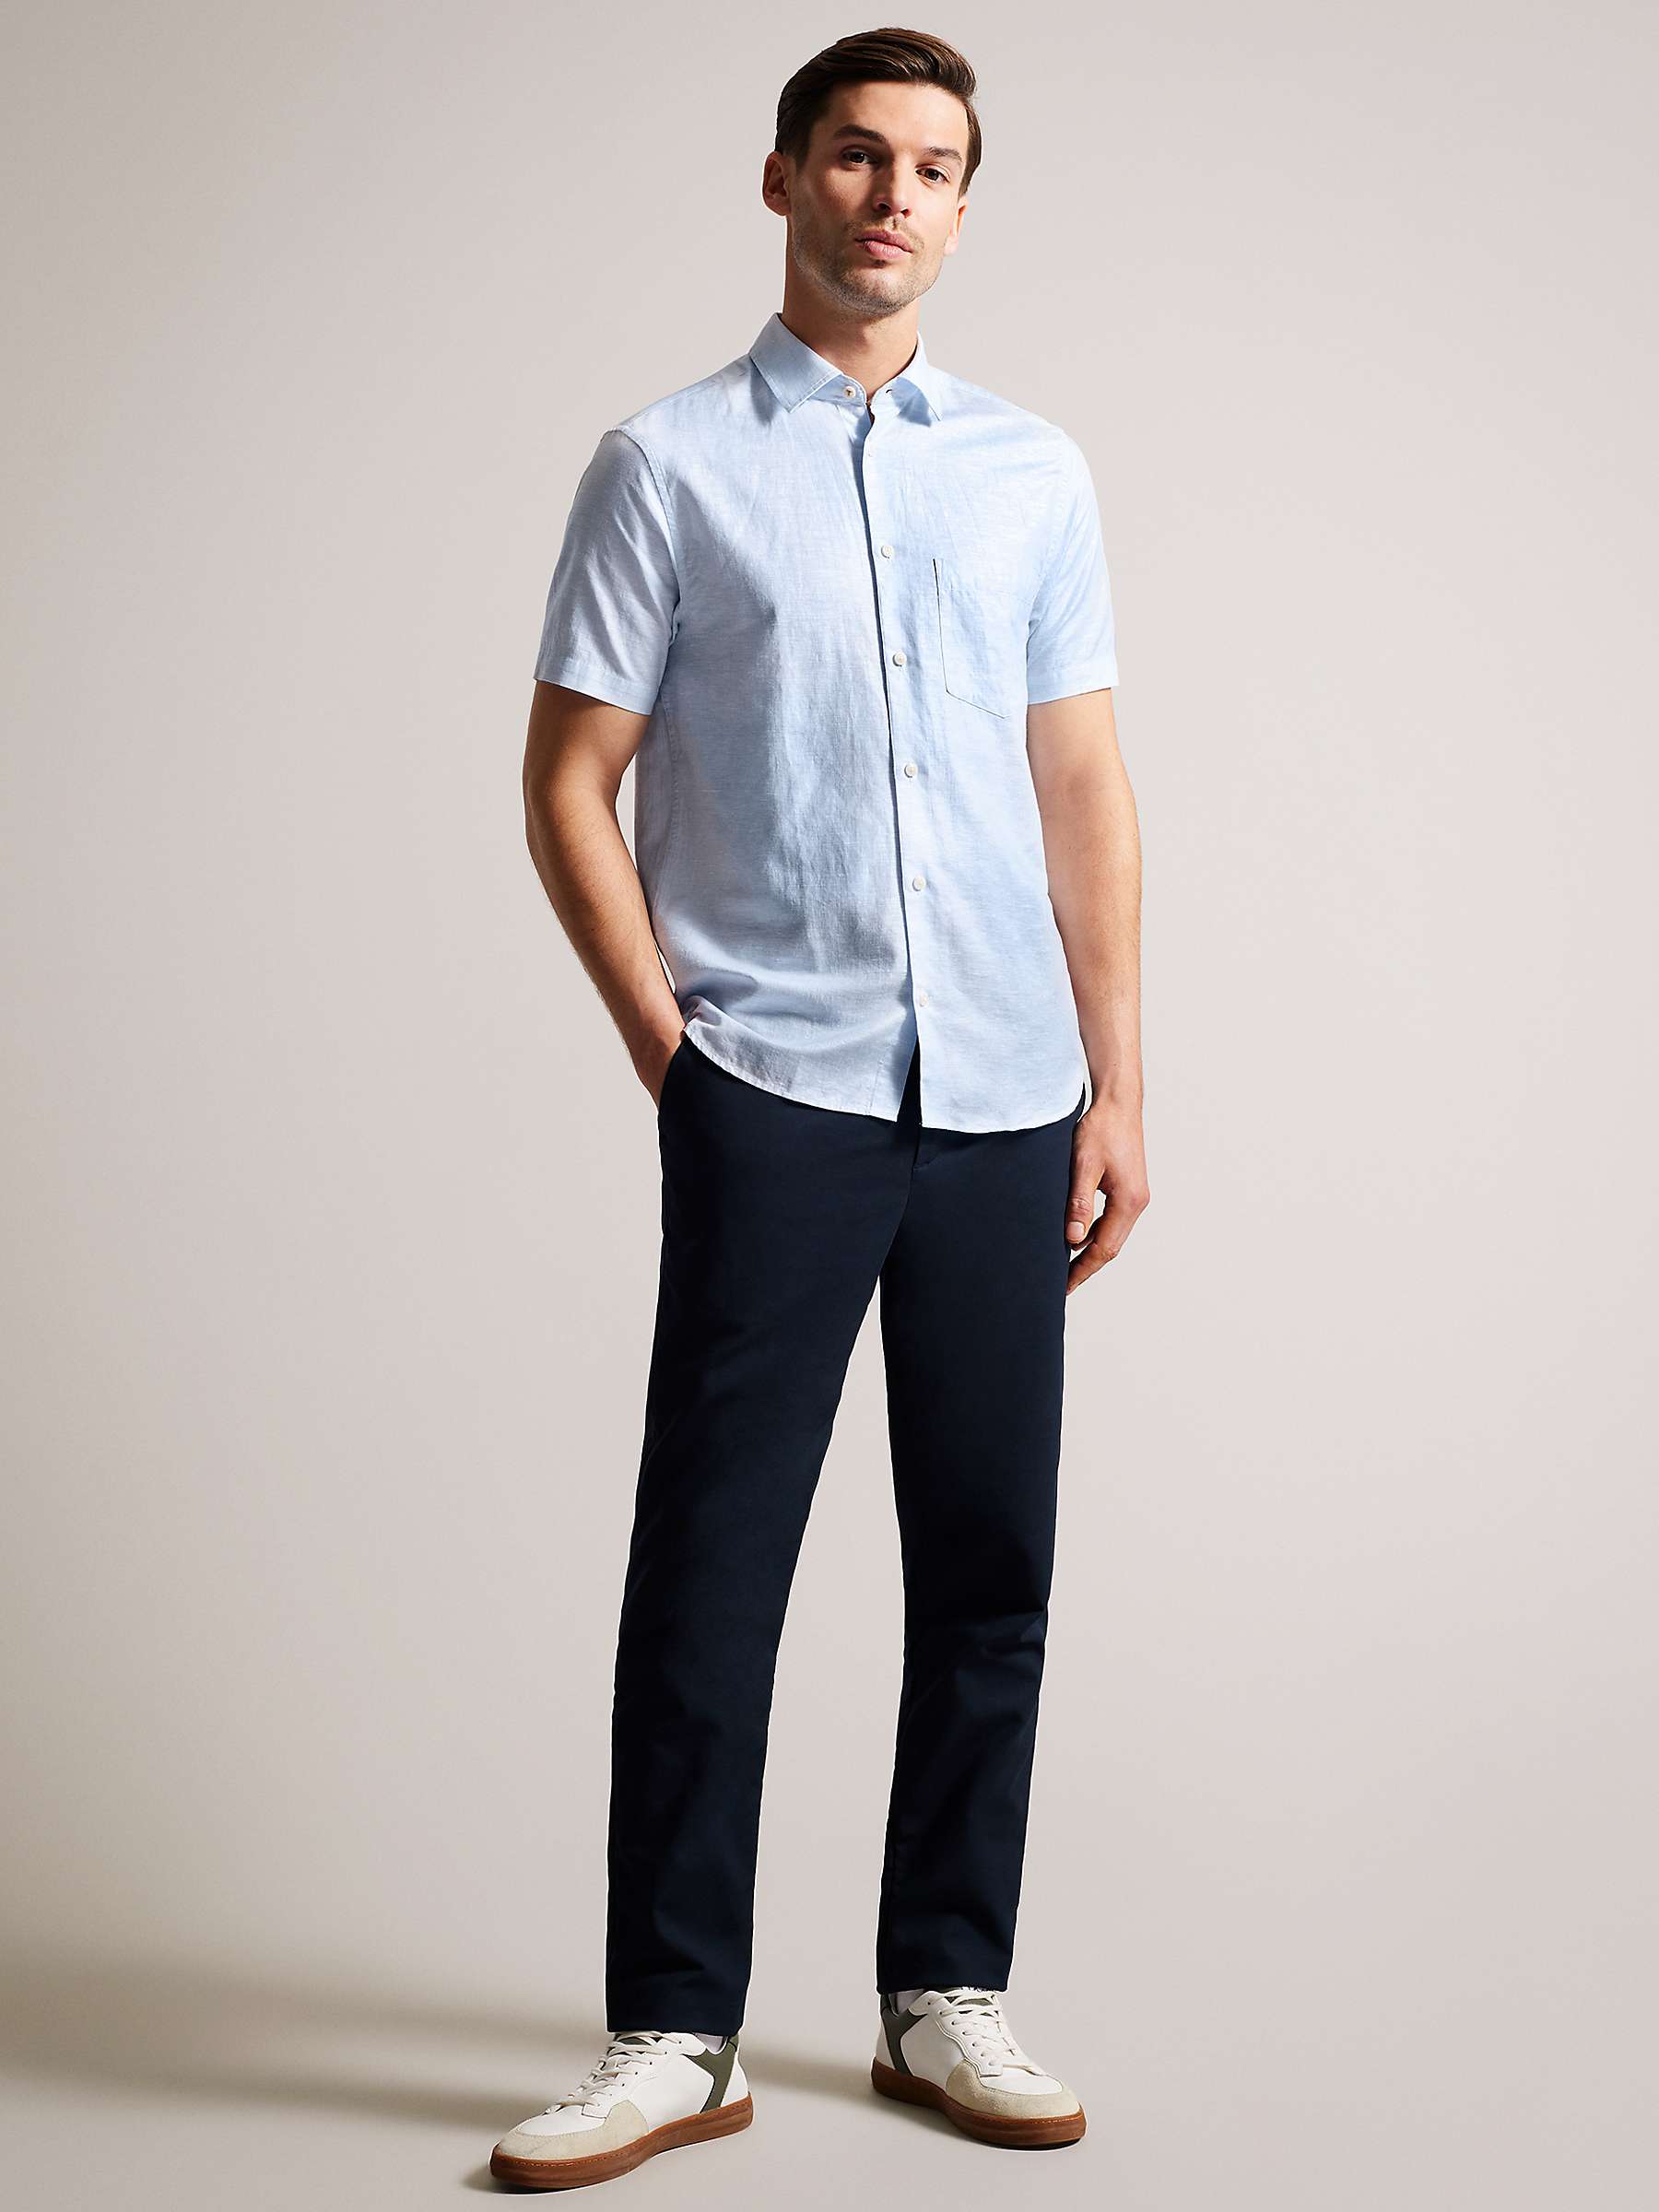 Ted Baker Kingfrd Linen Shirt, Light Blue at John Lewis & Partners